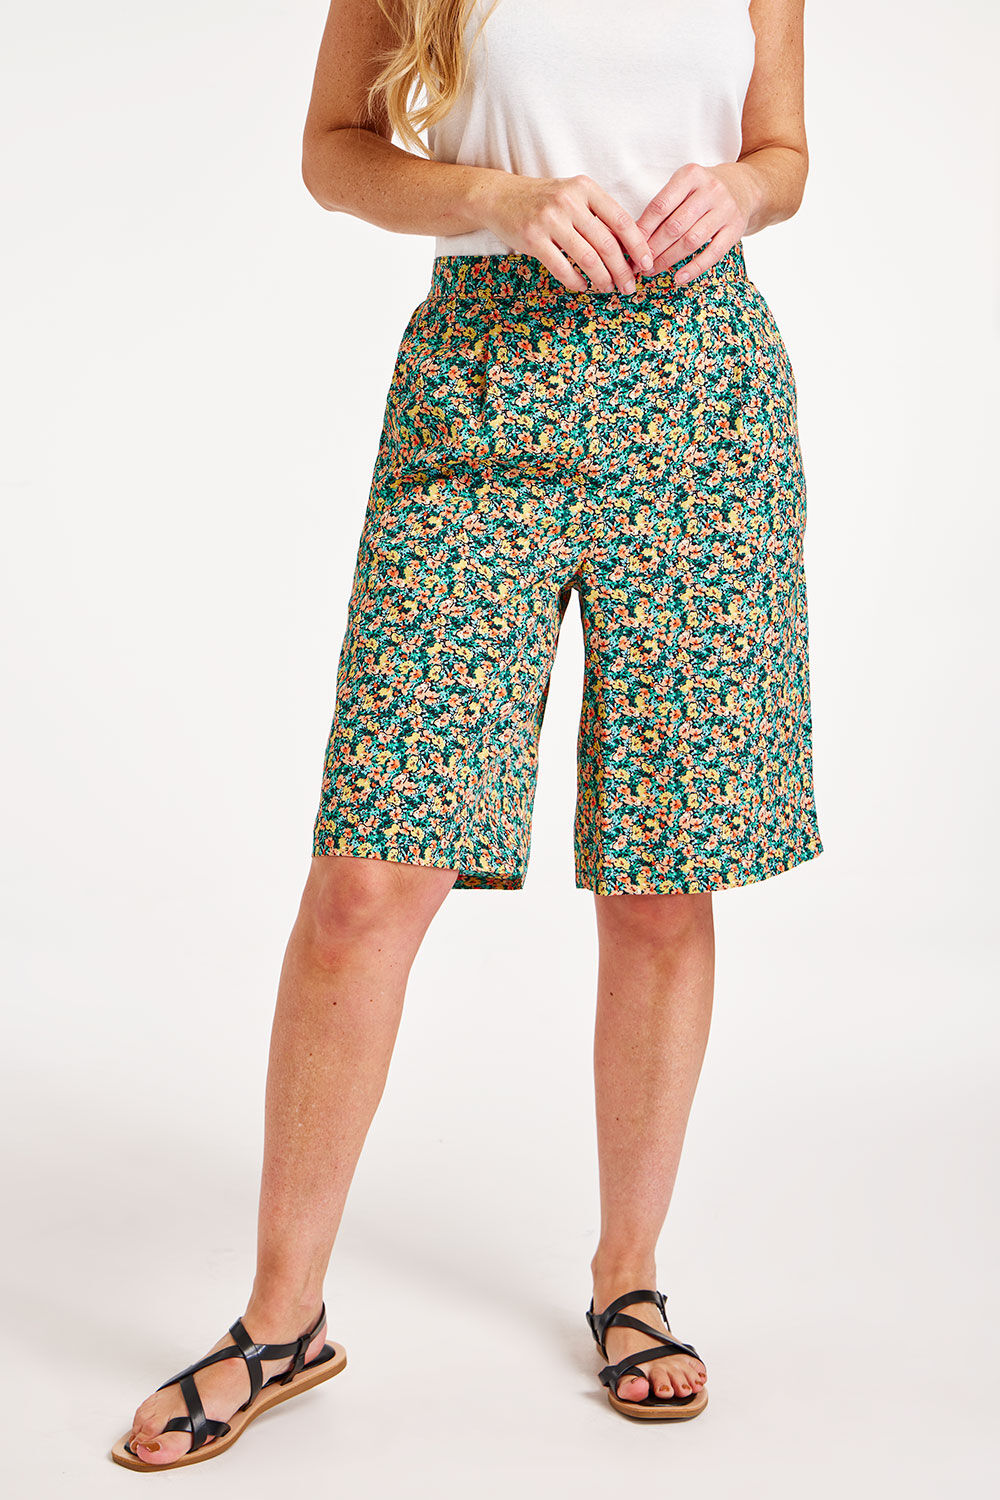 Bonmarche Green Ditsy Print Elasticated Shorts, Size: 16